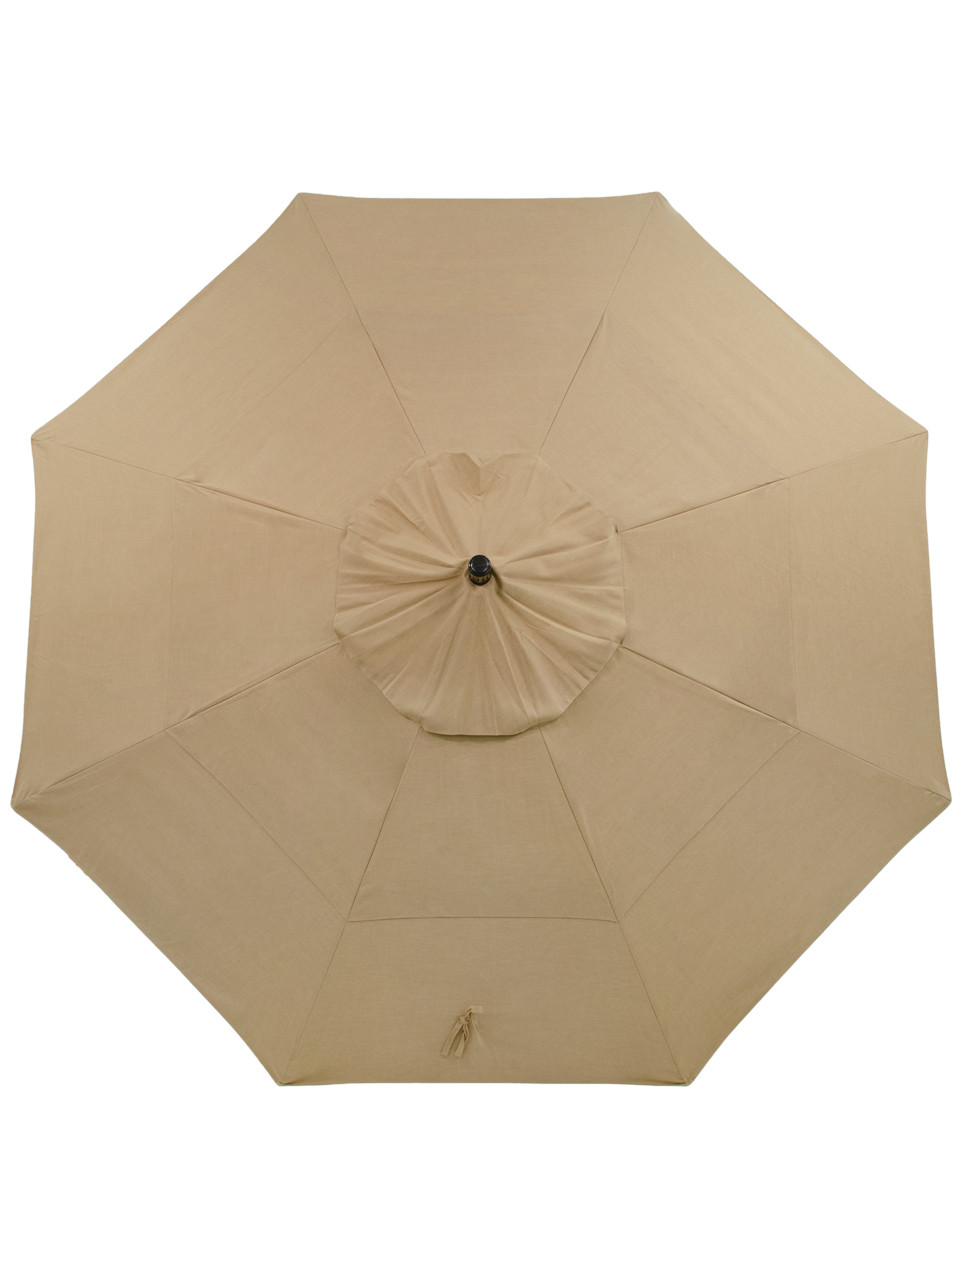 California Umbrella 11 ft. Canvas Heather Beige Canopy and Bronze Aluminum Market Umbrella